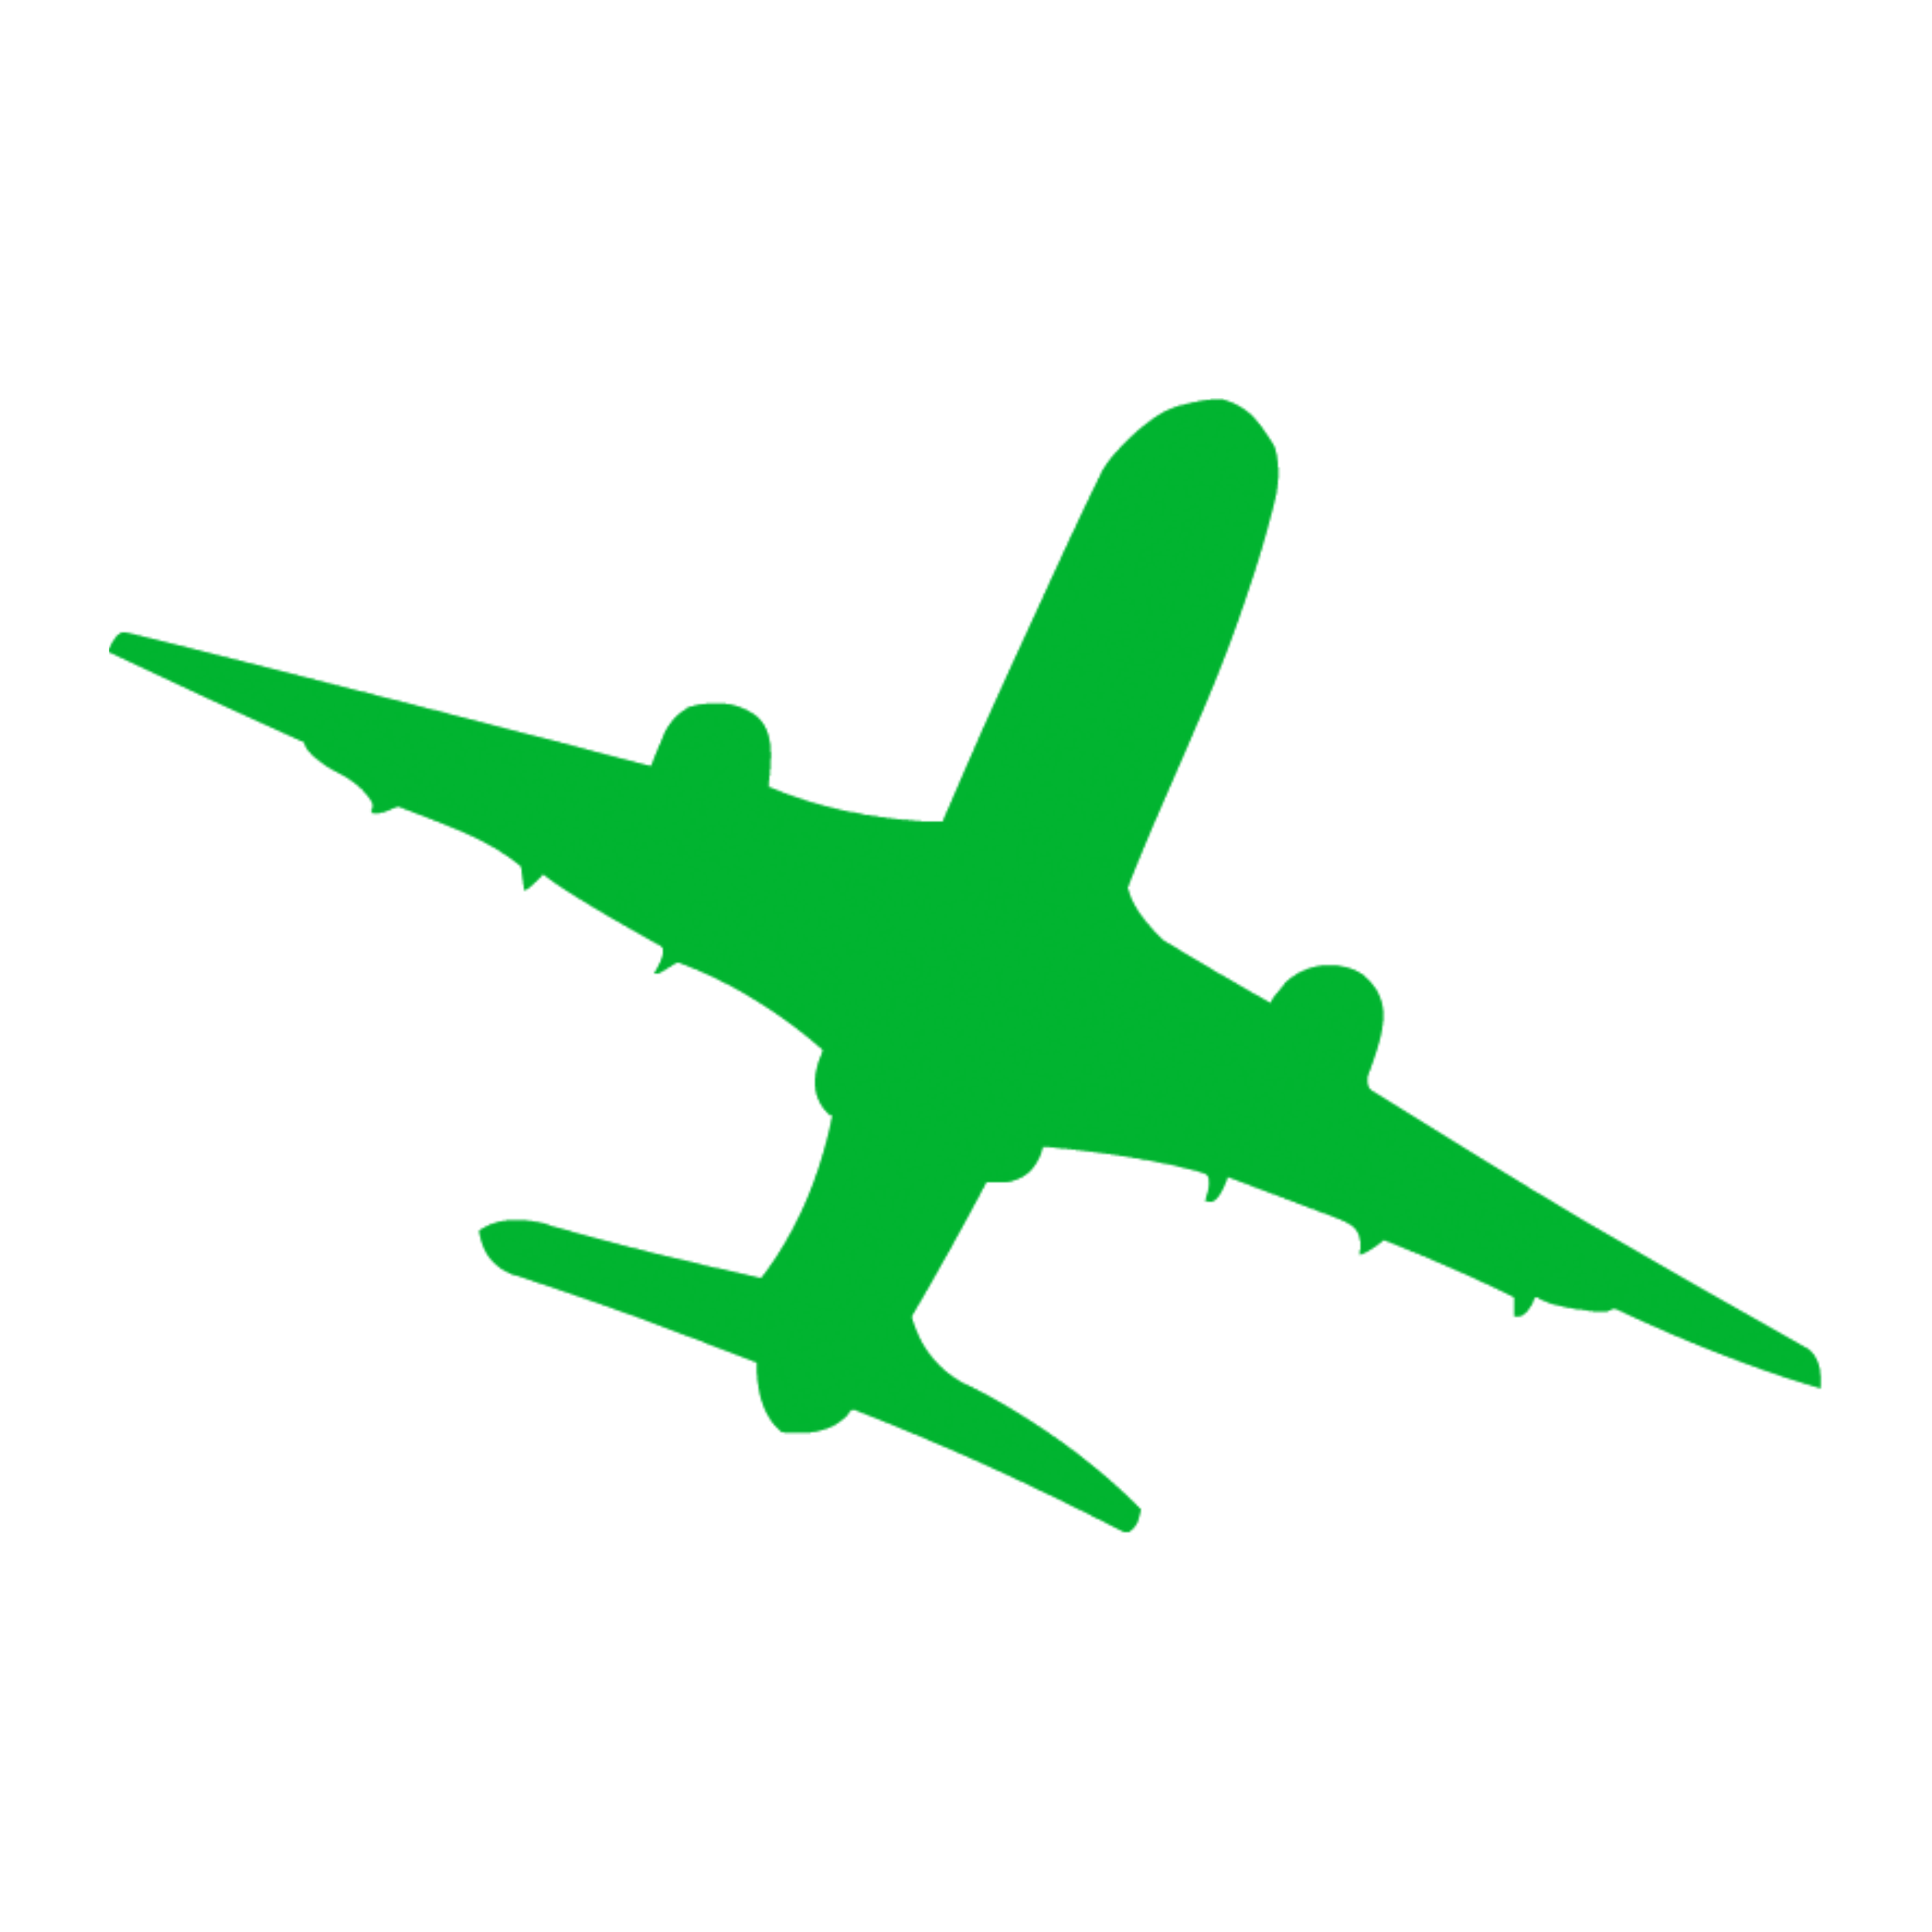 green clipart aeroplane